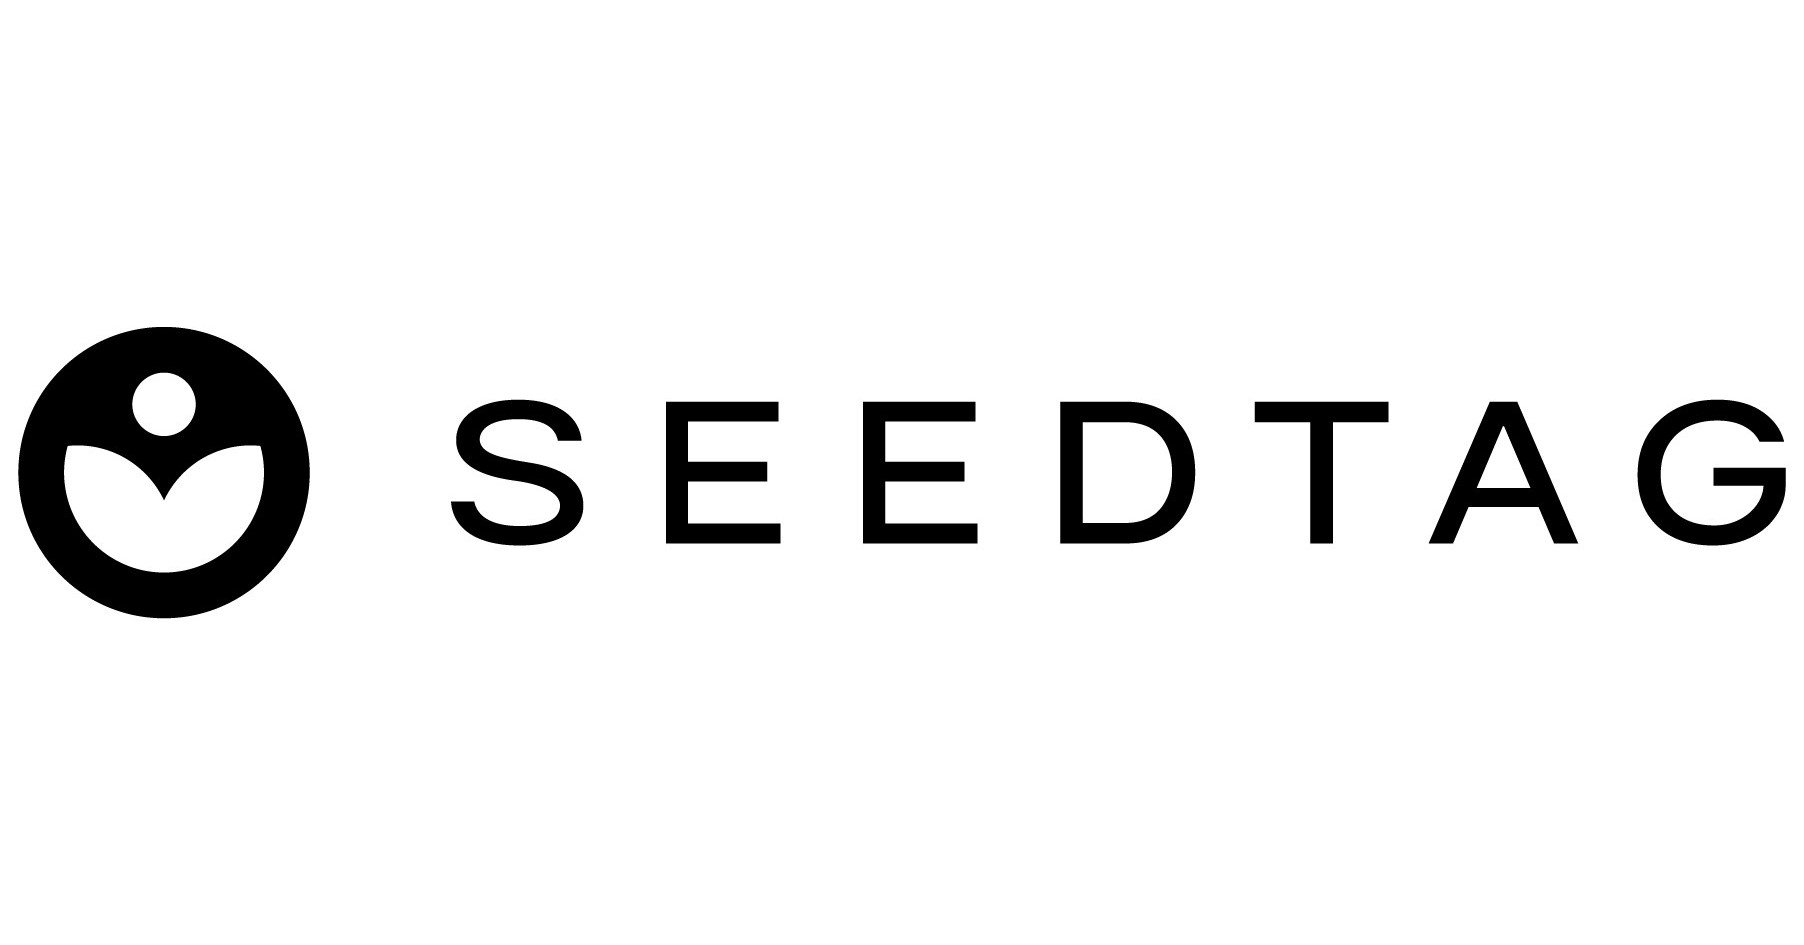 Seedtag Study Shows